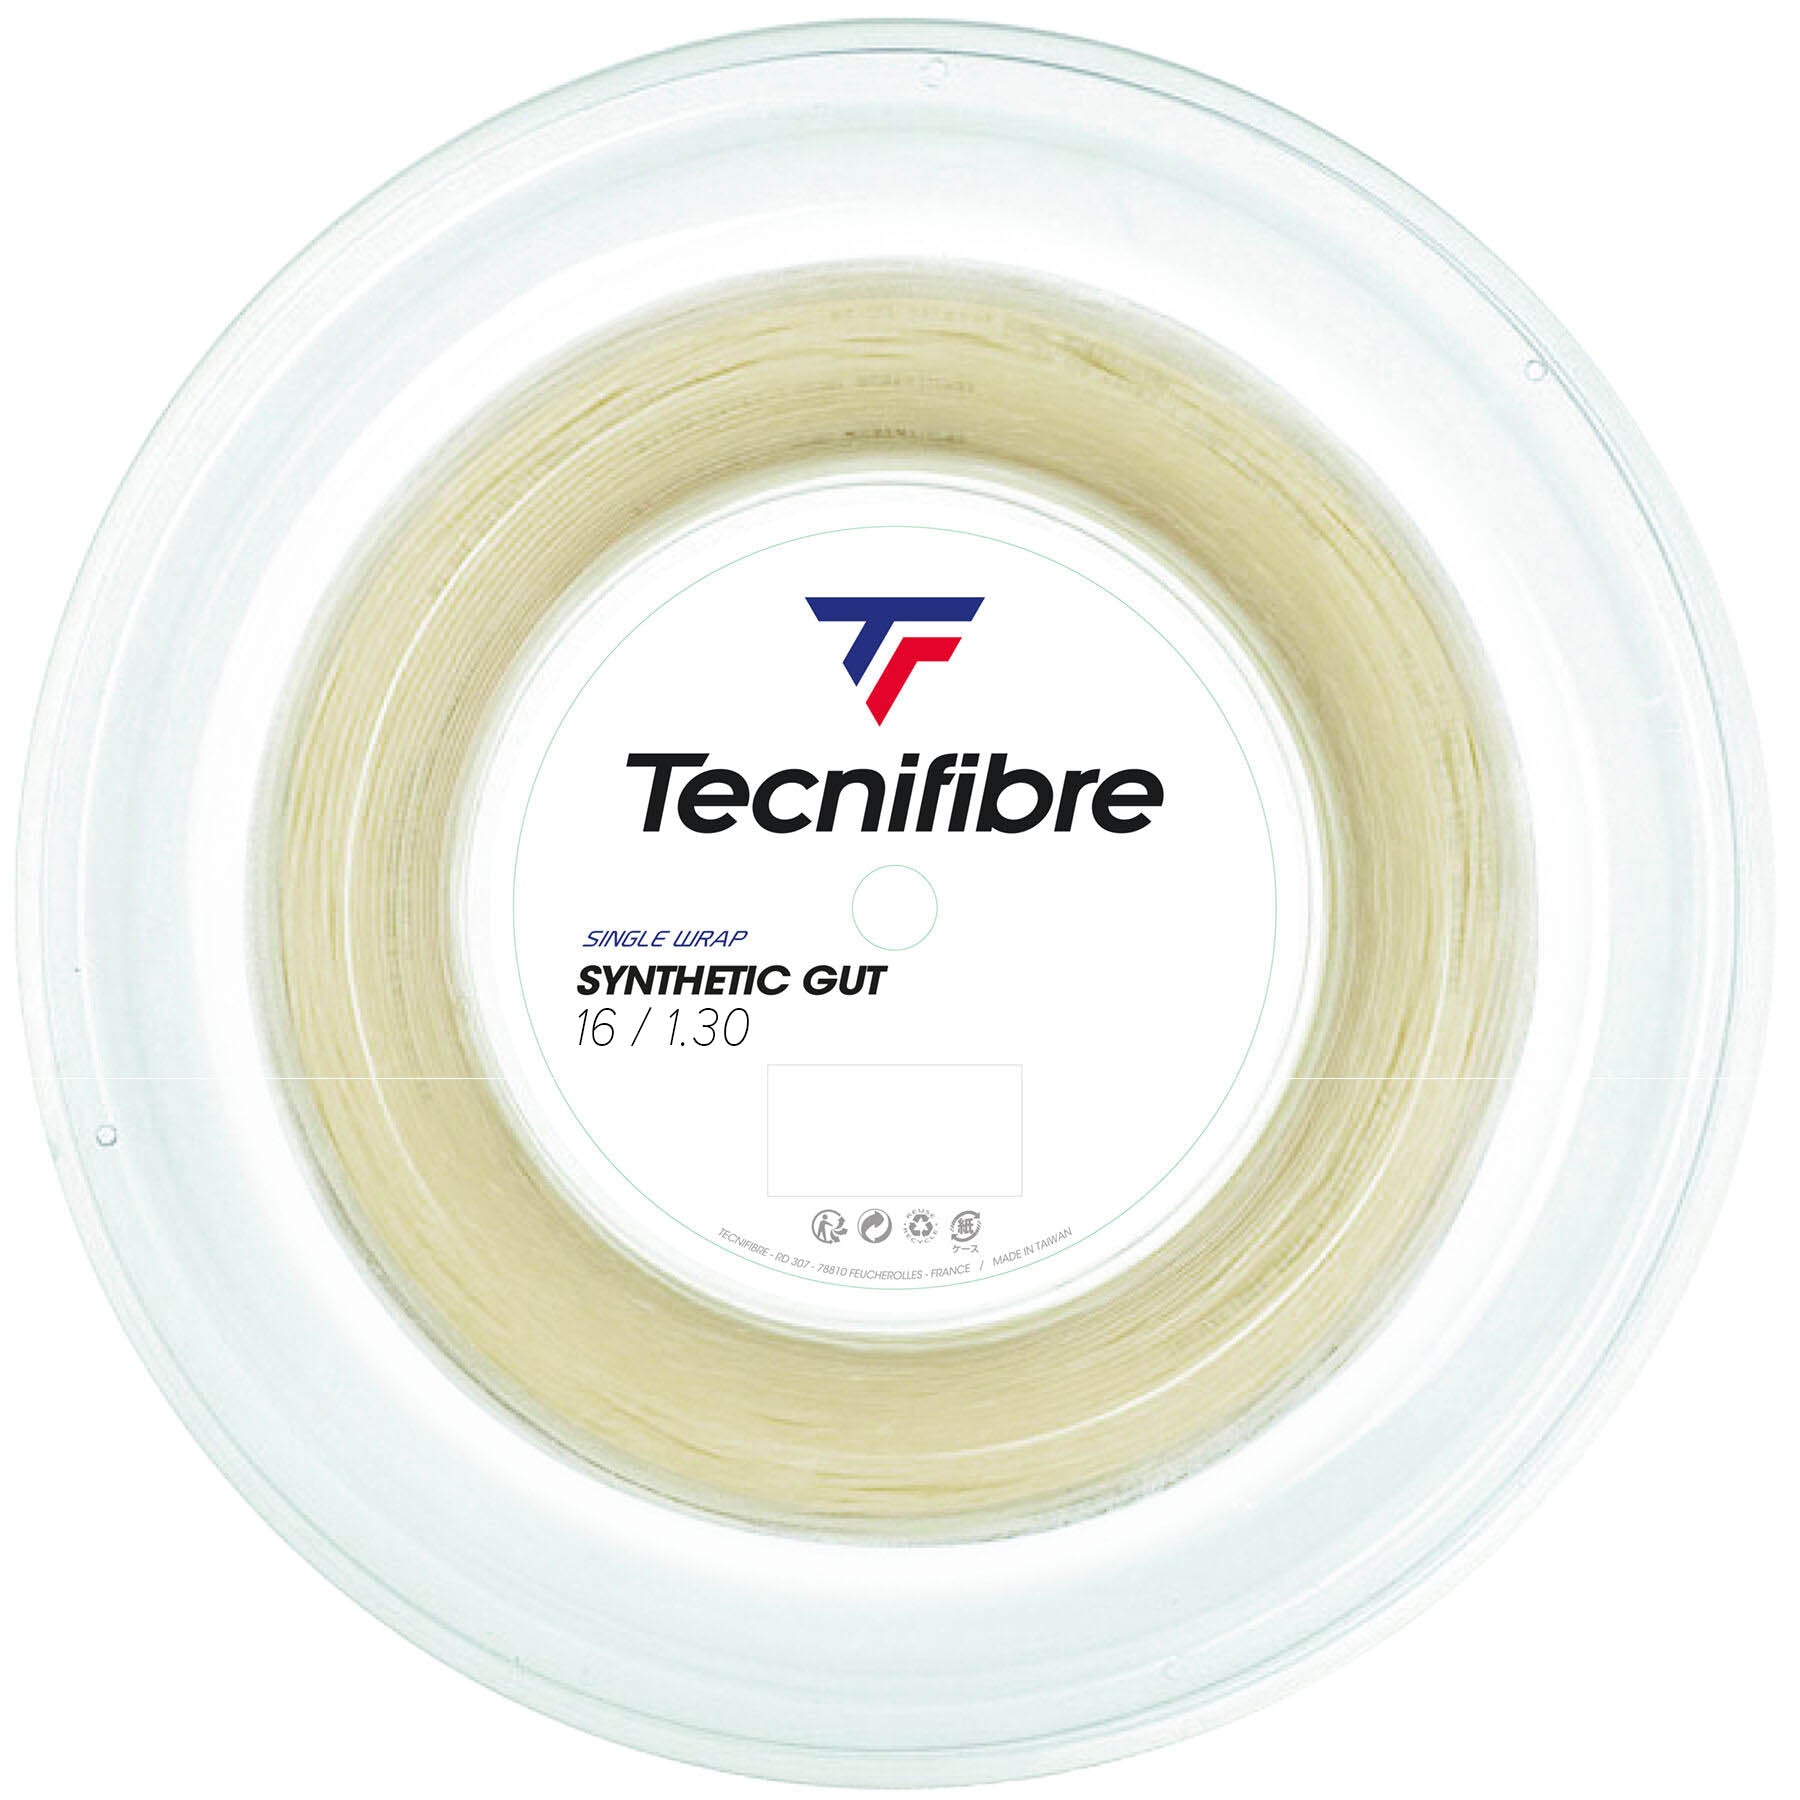 Tecnifibre Synthetic Gut Tennis String - 200m Reel